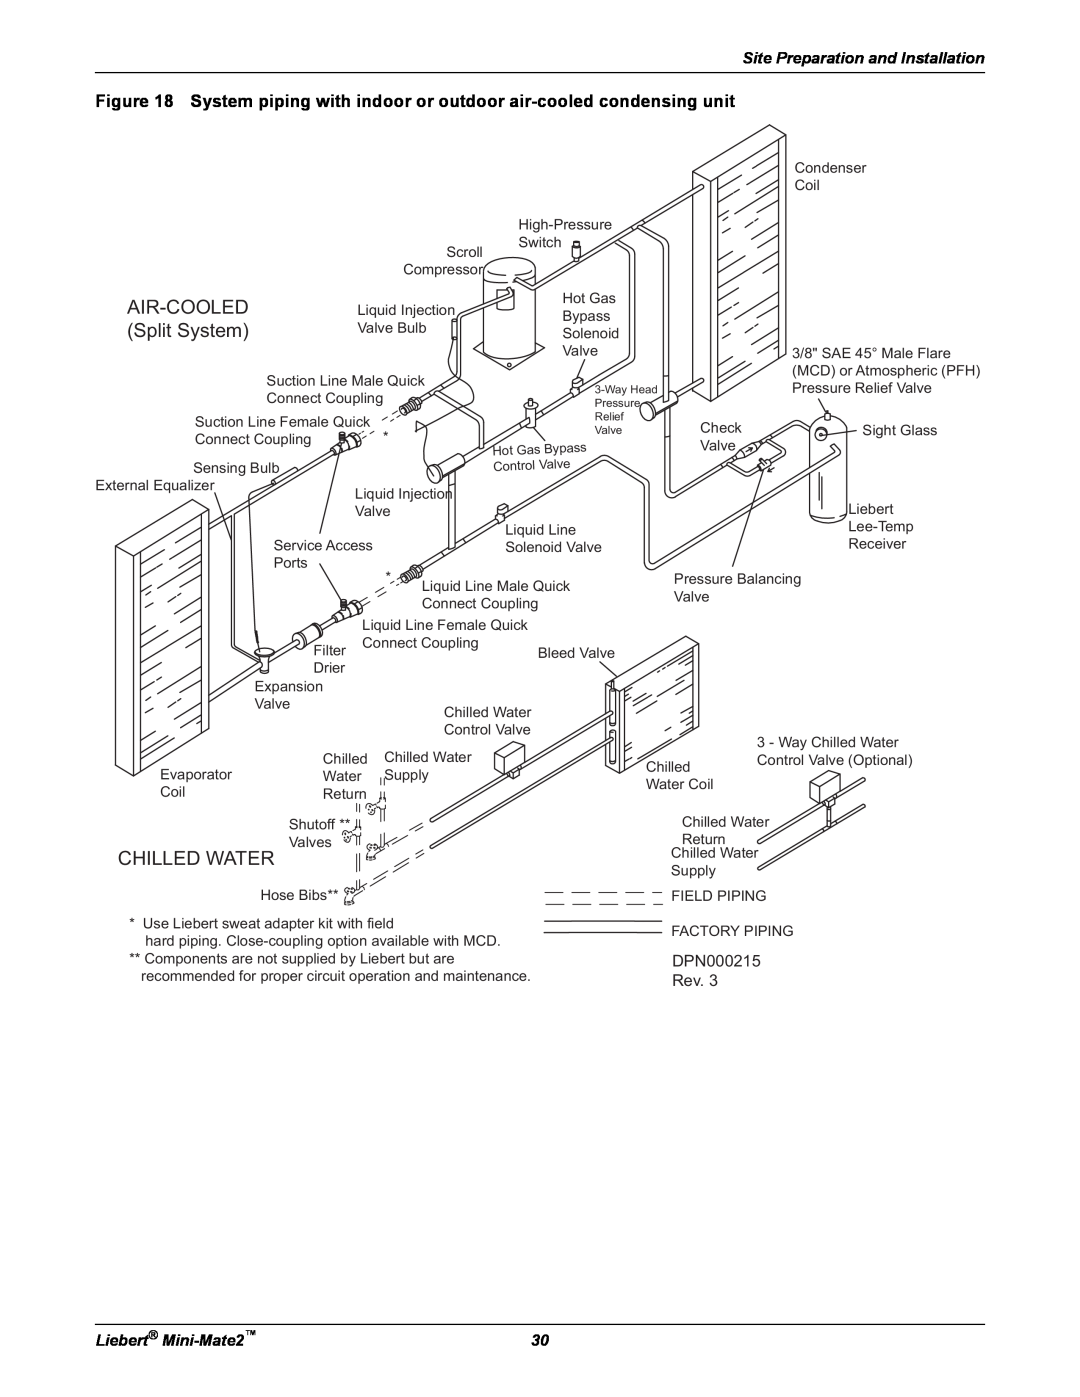 Emerson MINI-MATE2 user manual Air-Cooled, Split System, Chilled Water, Liebert Mini-Mate2 